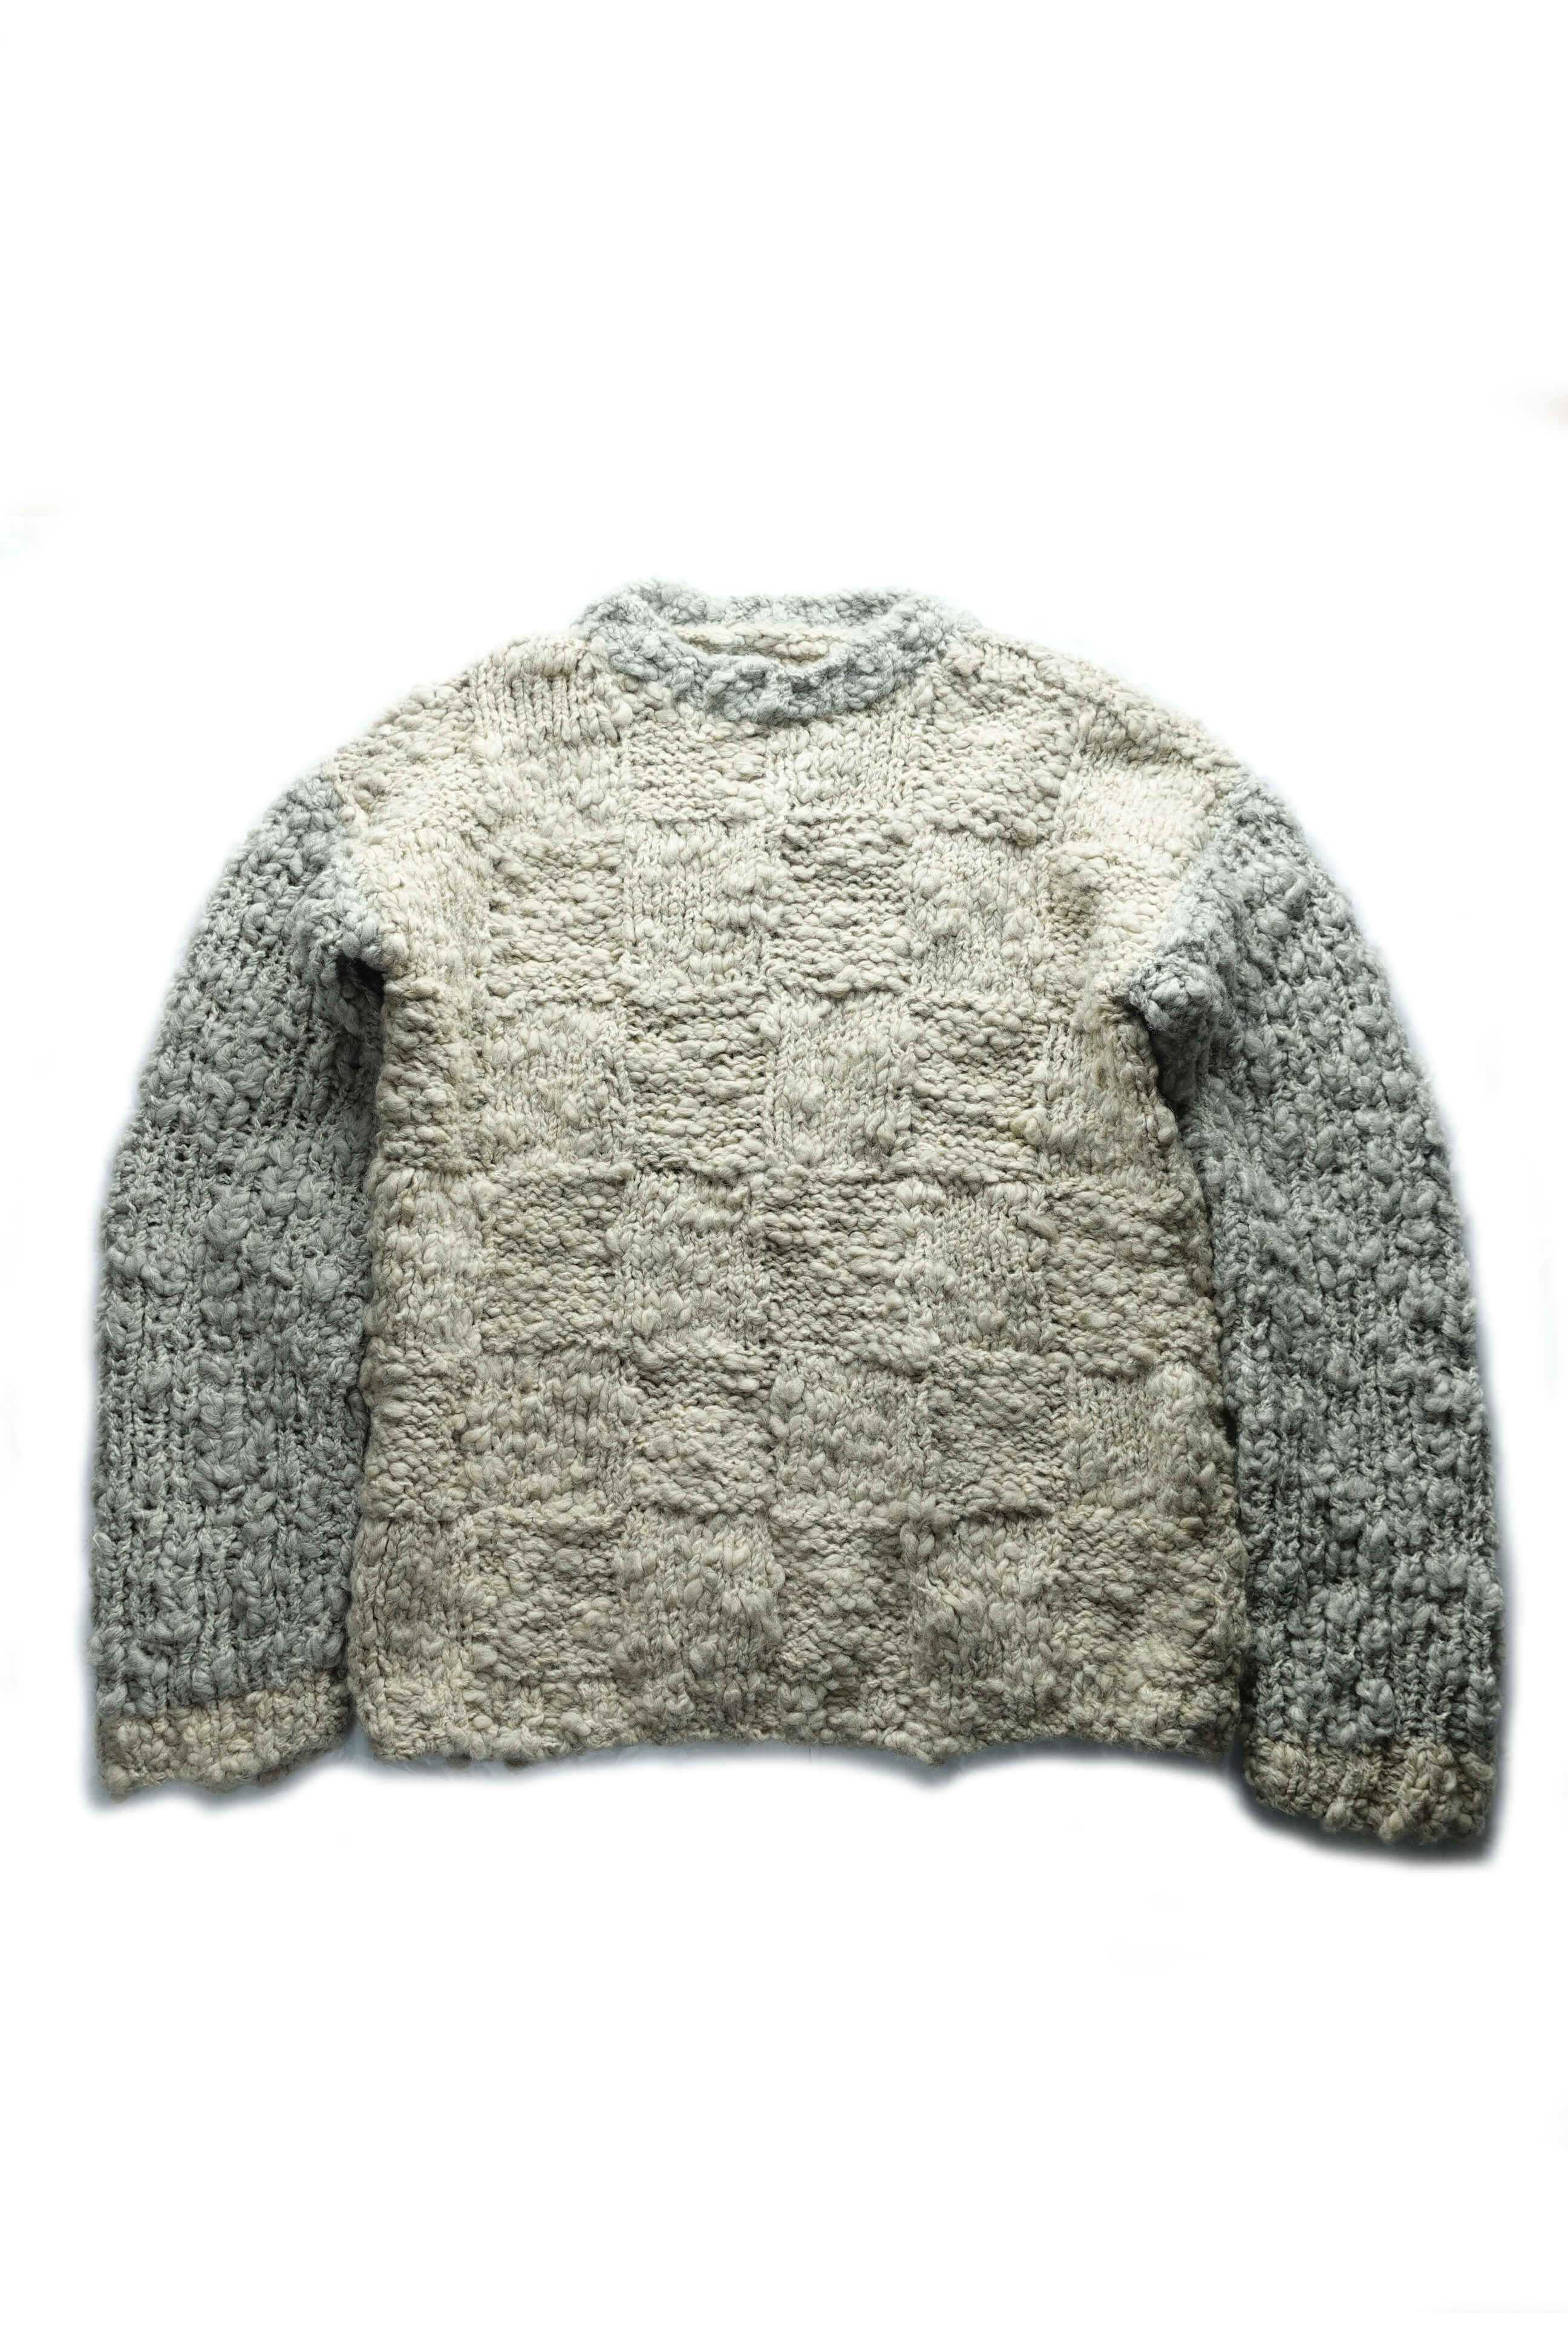 vintage heavy knit